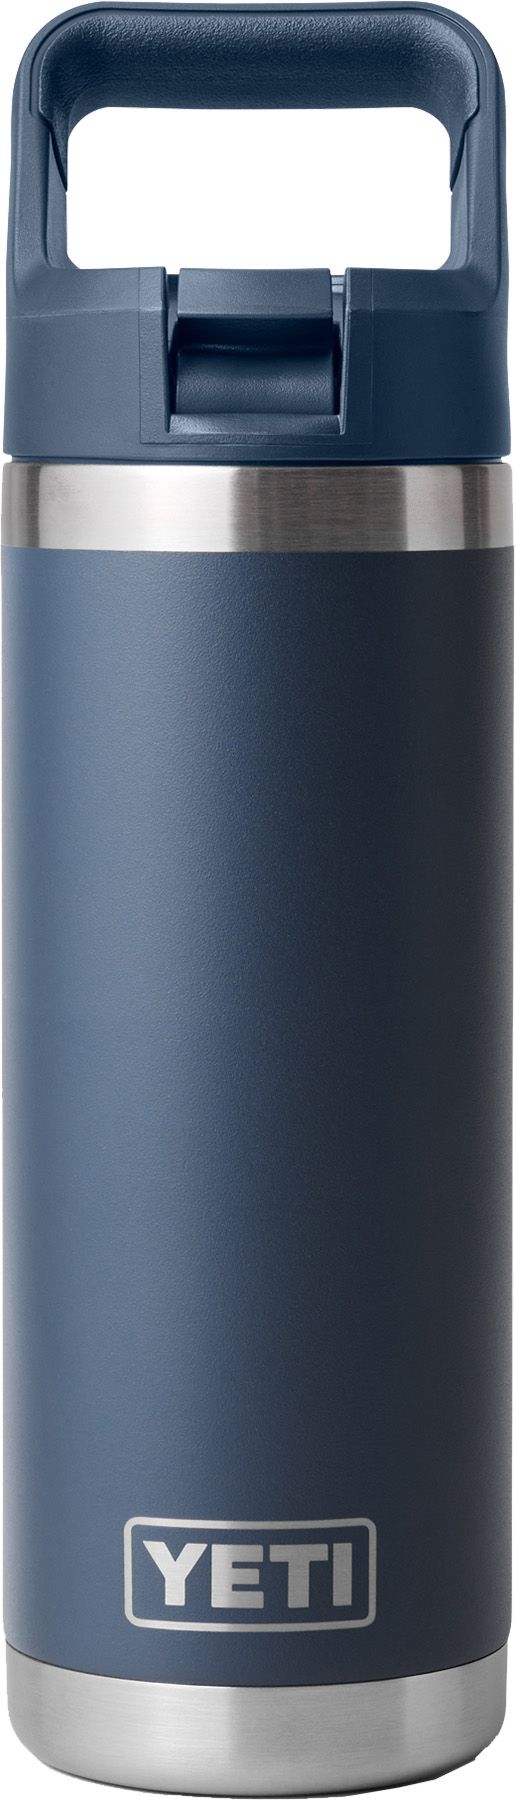 Photos - Water Bottle Yeti 18 oz. Rambler Bottle with Color-Matched Straw Cap, Navy 23YETURMBLR1 